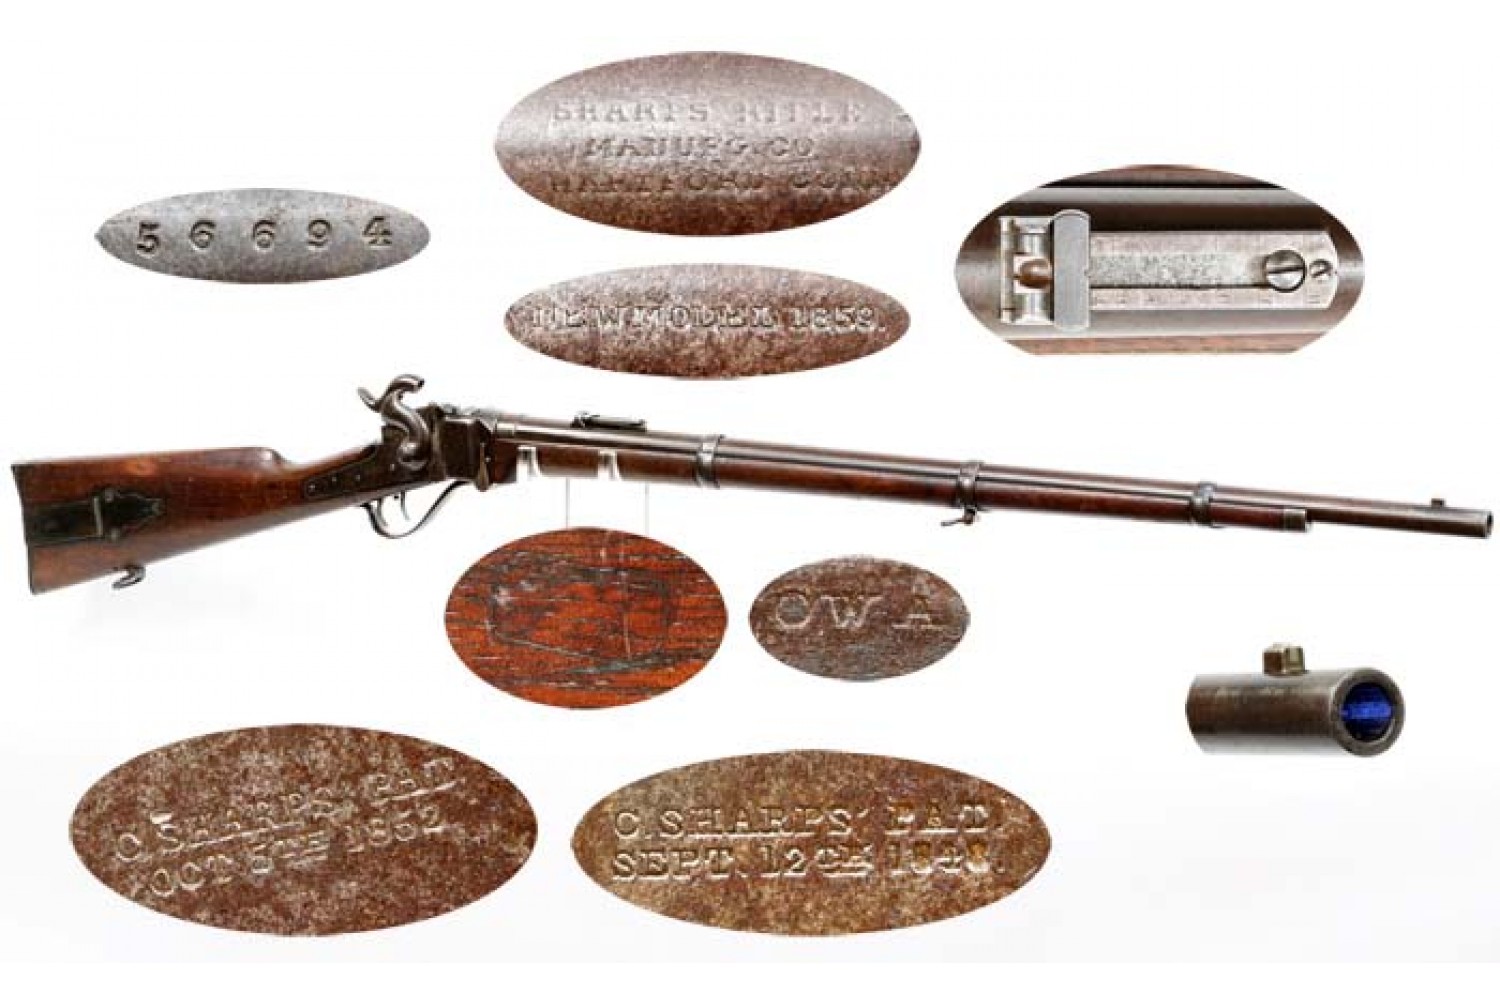 1859 sharps rifle for sale